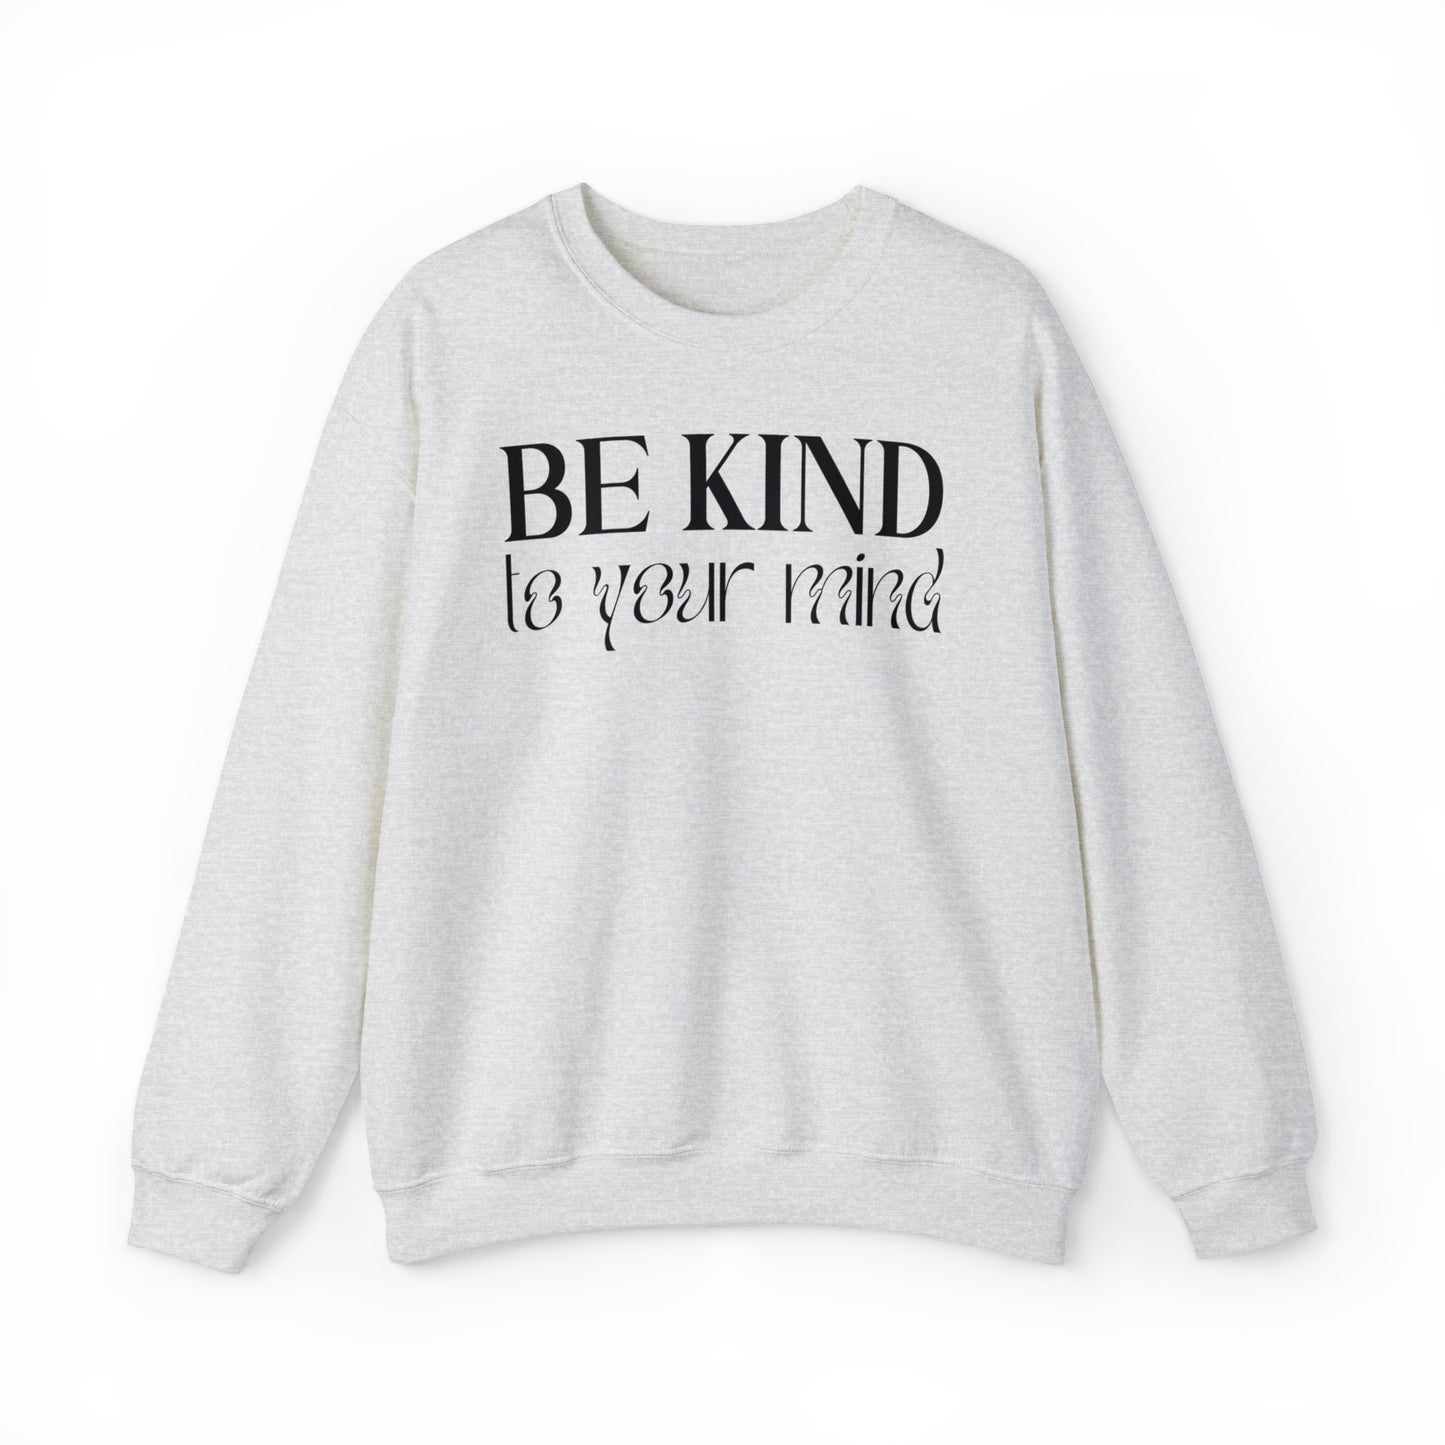 Be kind to you mind sweatshirt